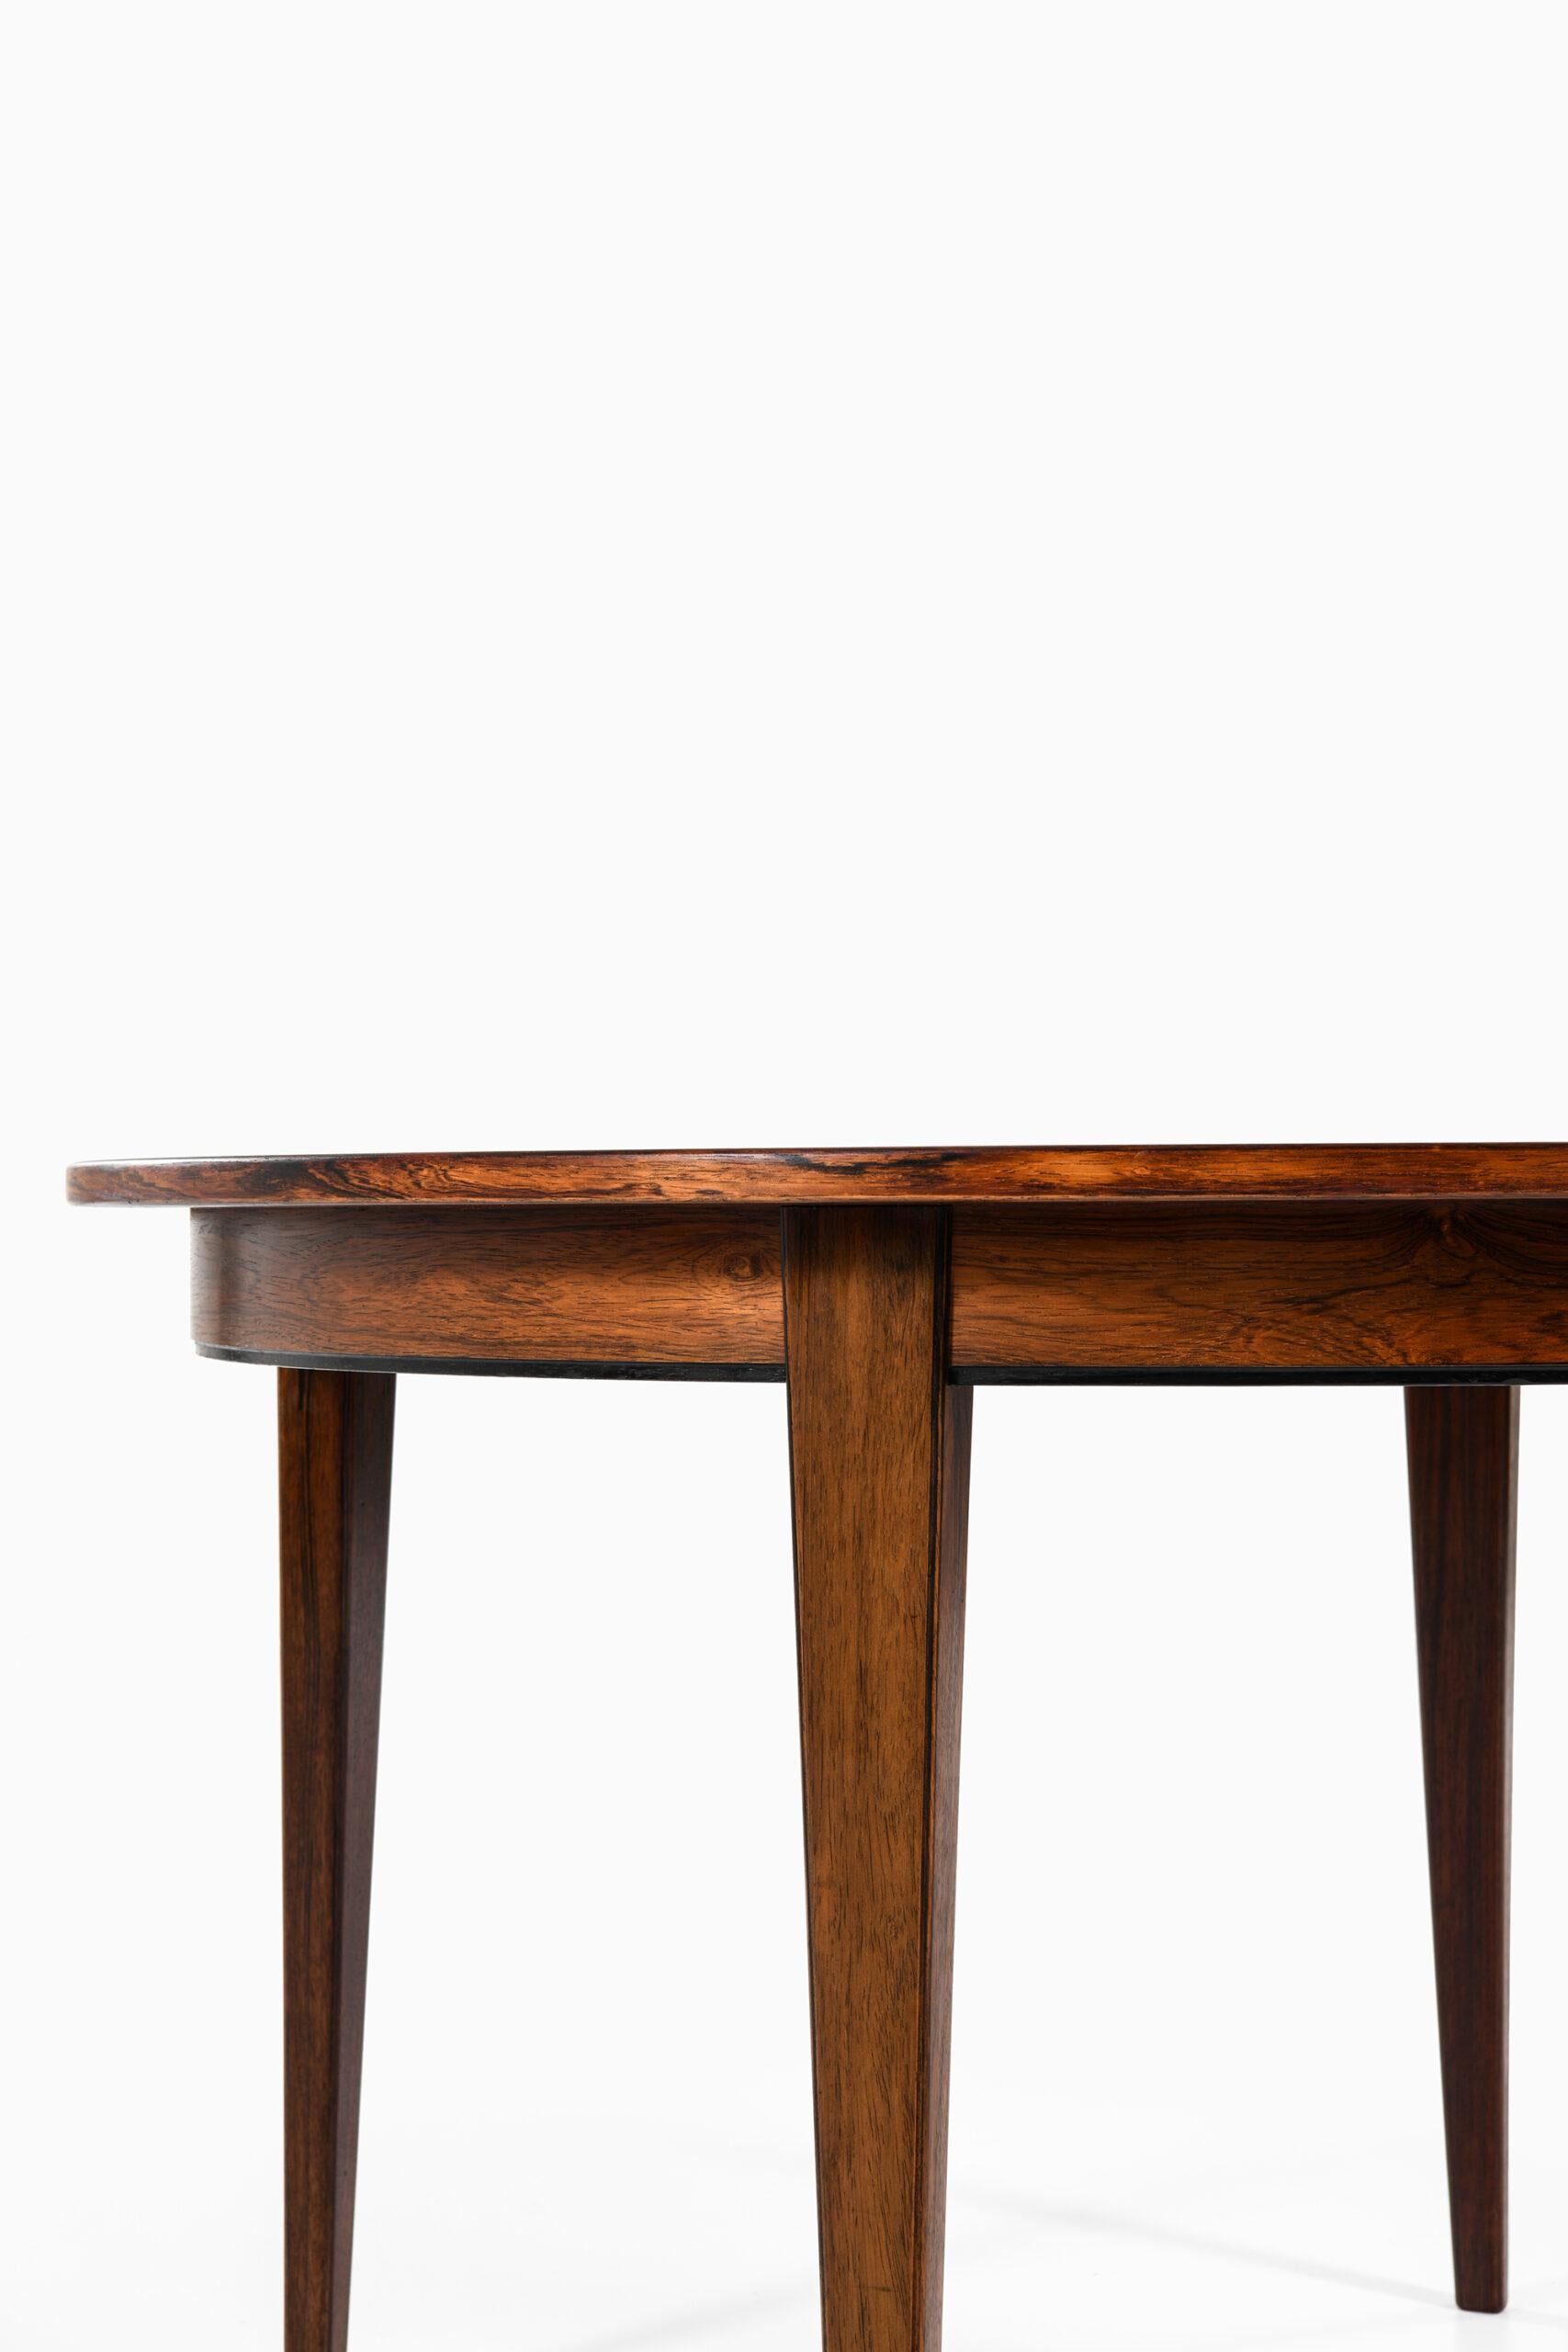 Dining table model 55 designed by Gunni Omann. Produced by Omann Jun Møbelfabrik in Denmark.
Width: 120 ( 270 ) cm.